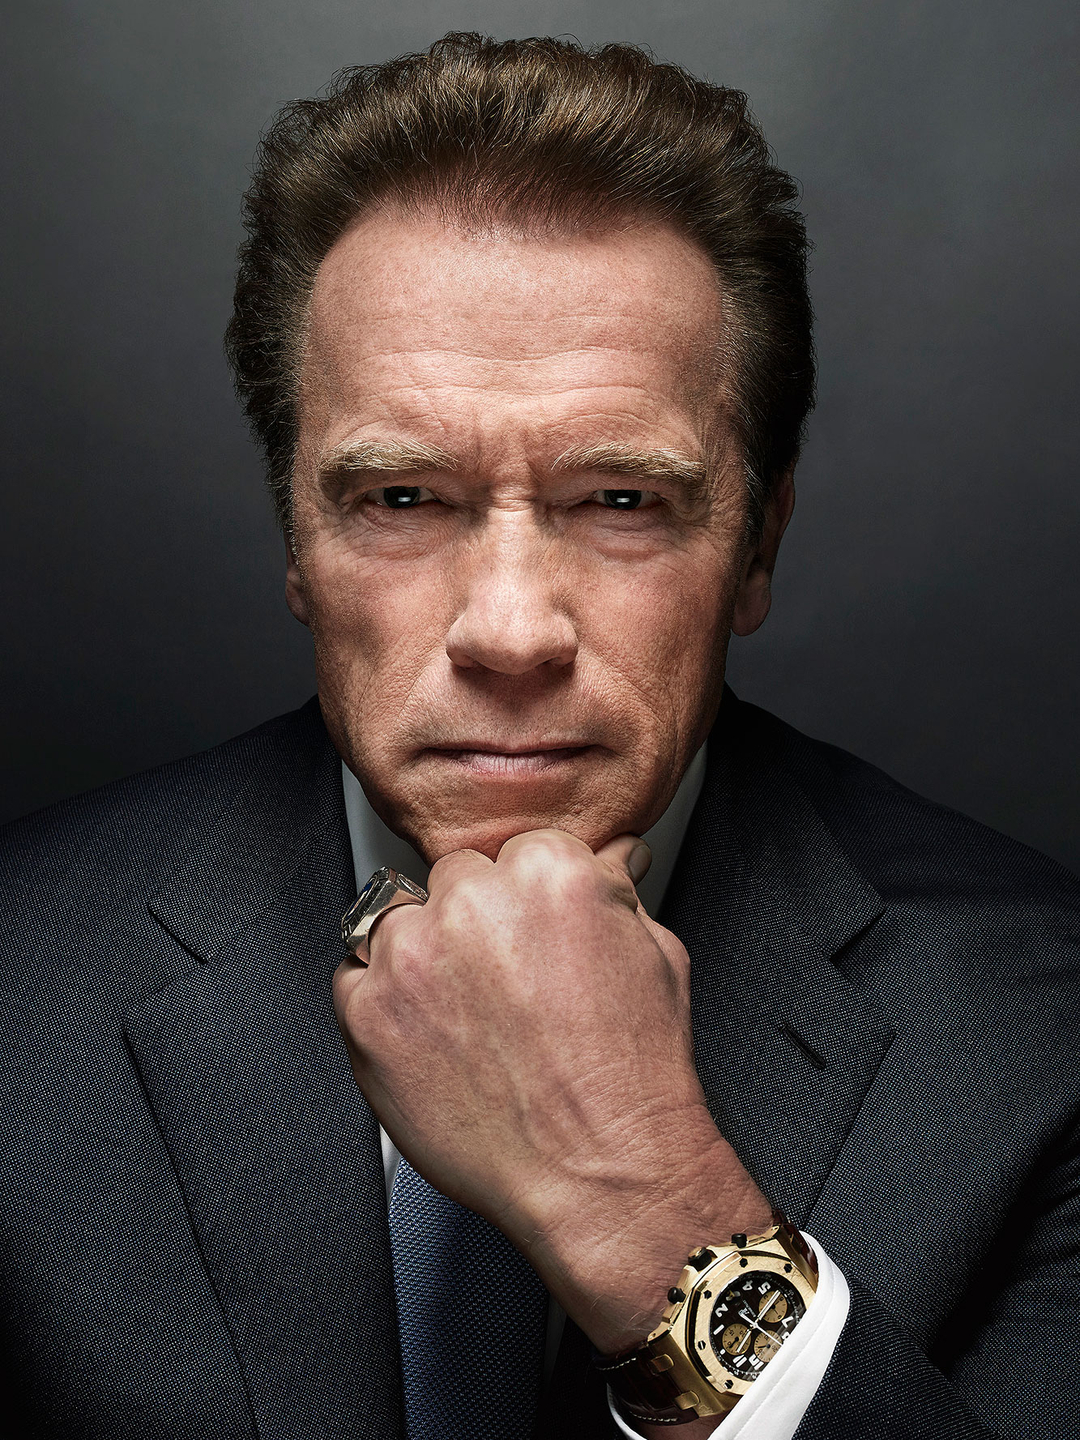 Arnold Schwarzenegger where did he study